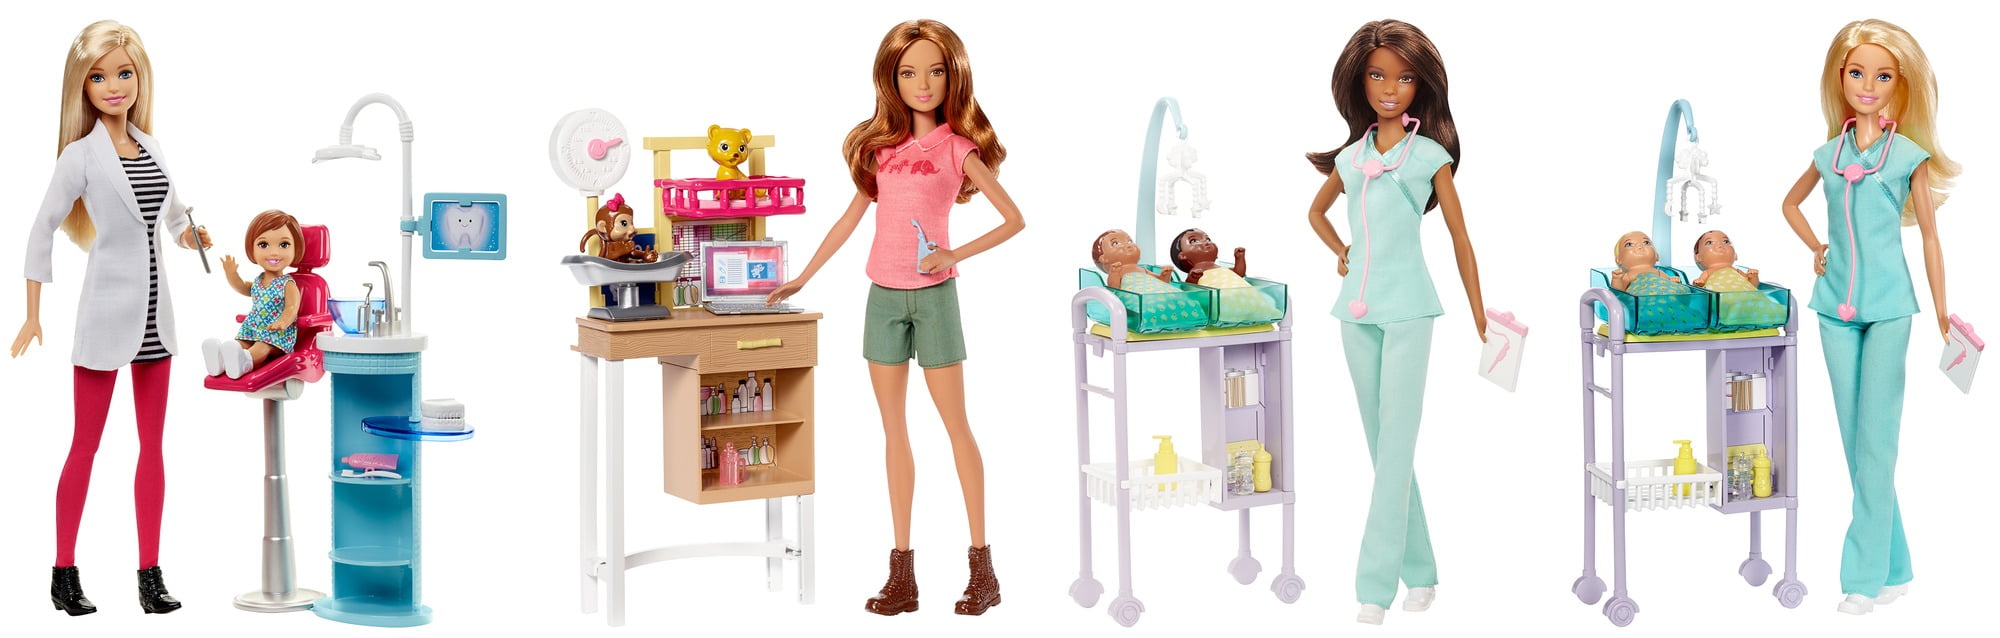 MTTDHB63 Barbie Crrs Playset Assortment Baby Doll - 4 Piece -  Mattel